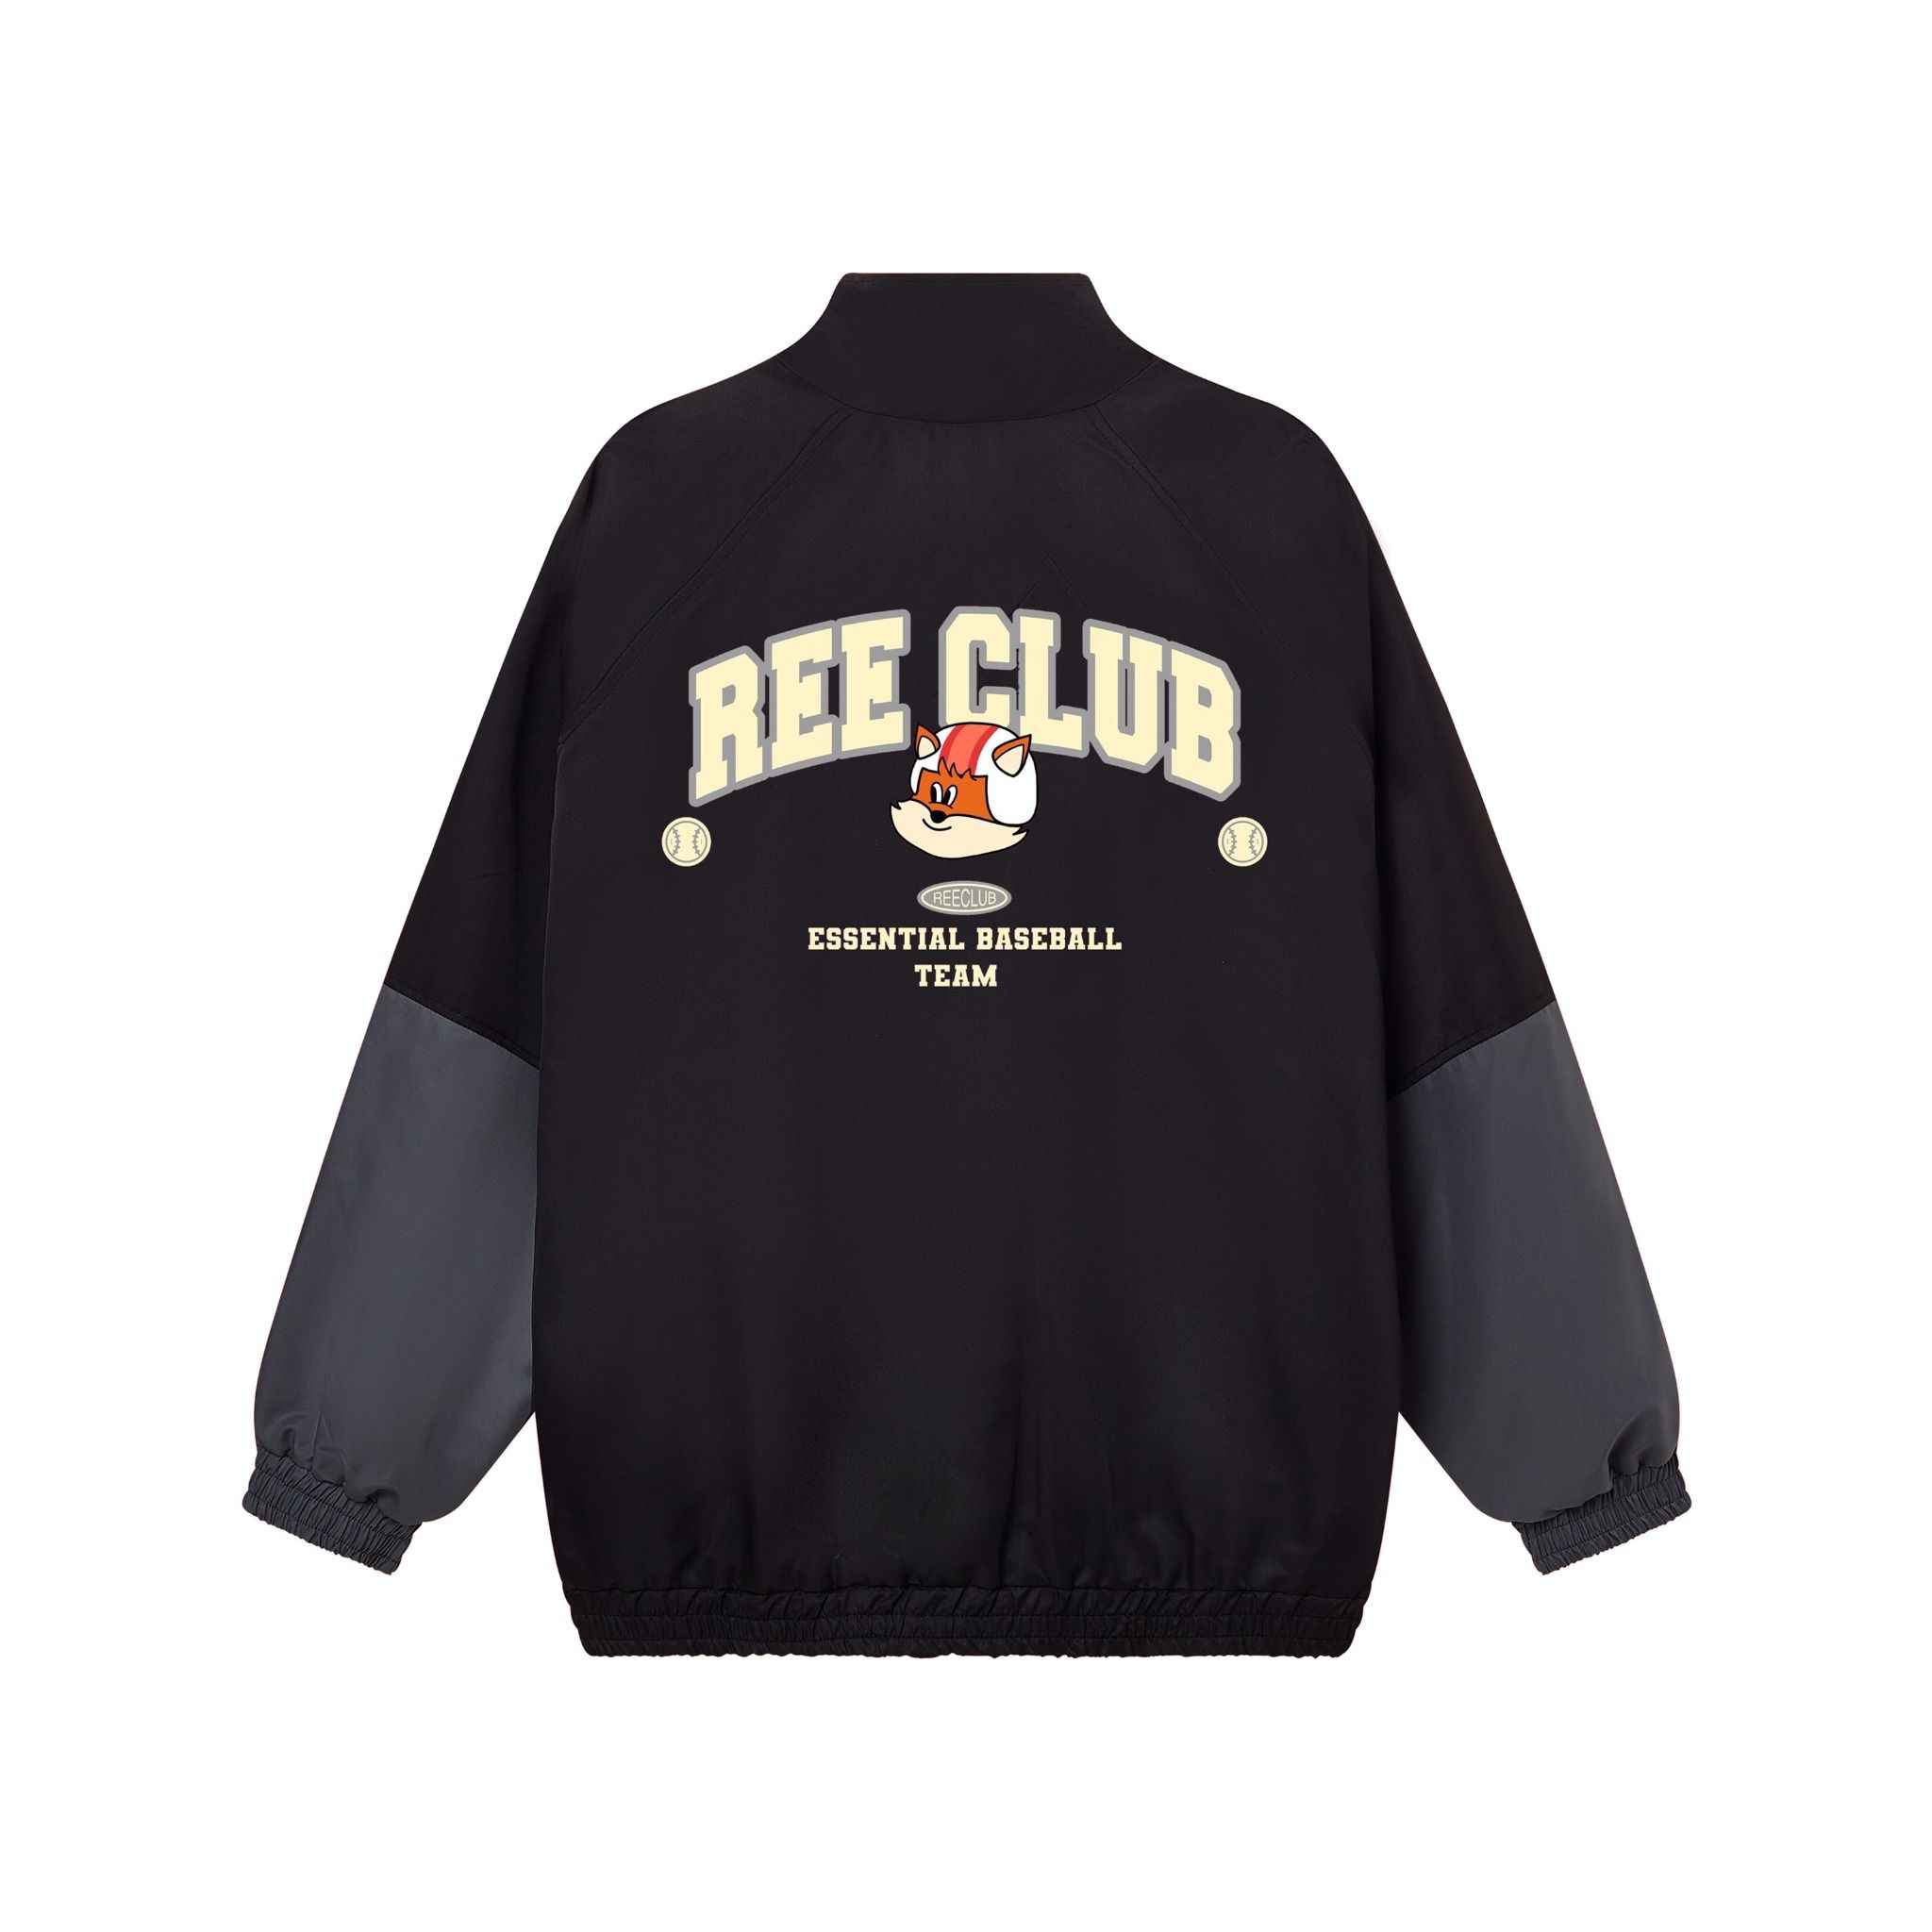 REE CLUB JACKET - BLACK